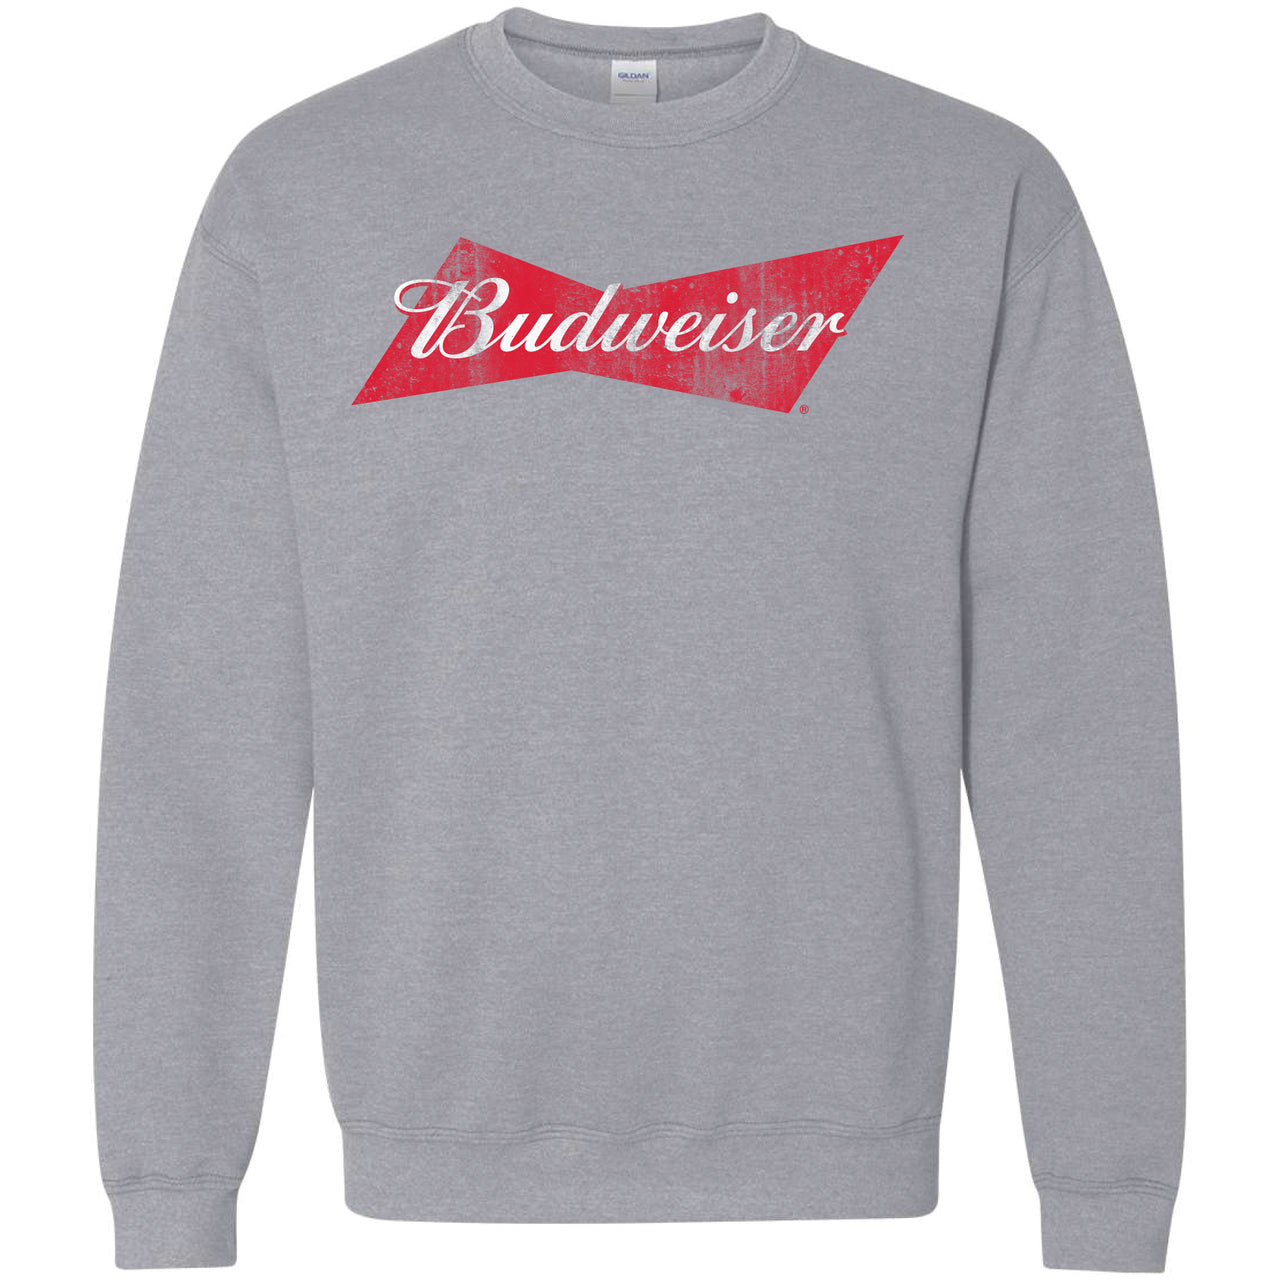 Budweiser - Bow Tie Logo Crew Sweatshirt